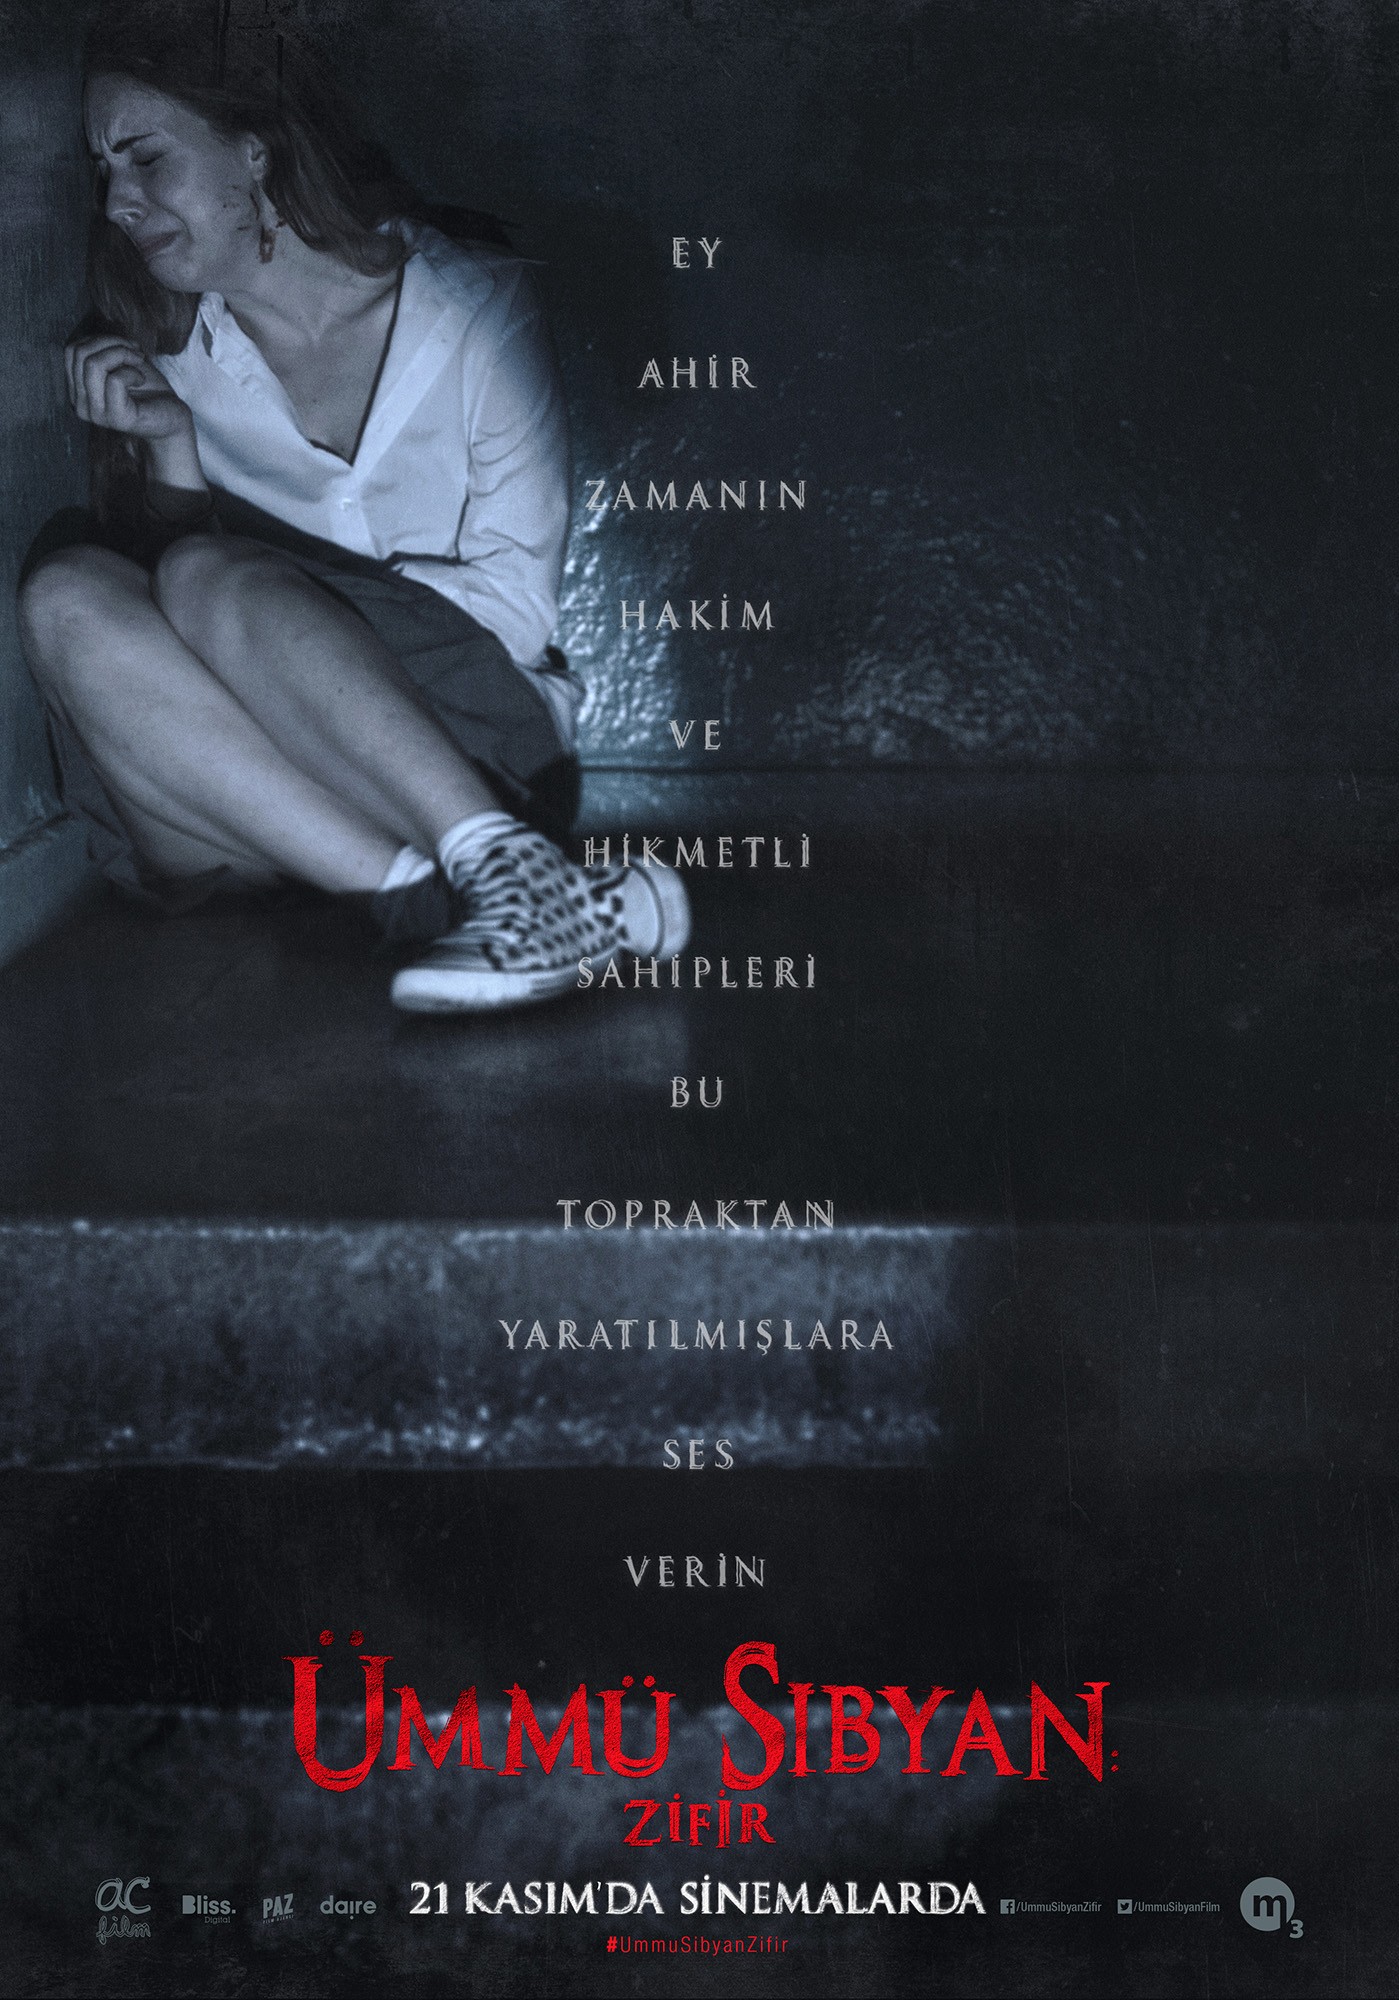 Mega Sized Movie Poster Image for Ümmü Sıbyan Zifir (#6 of 12)